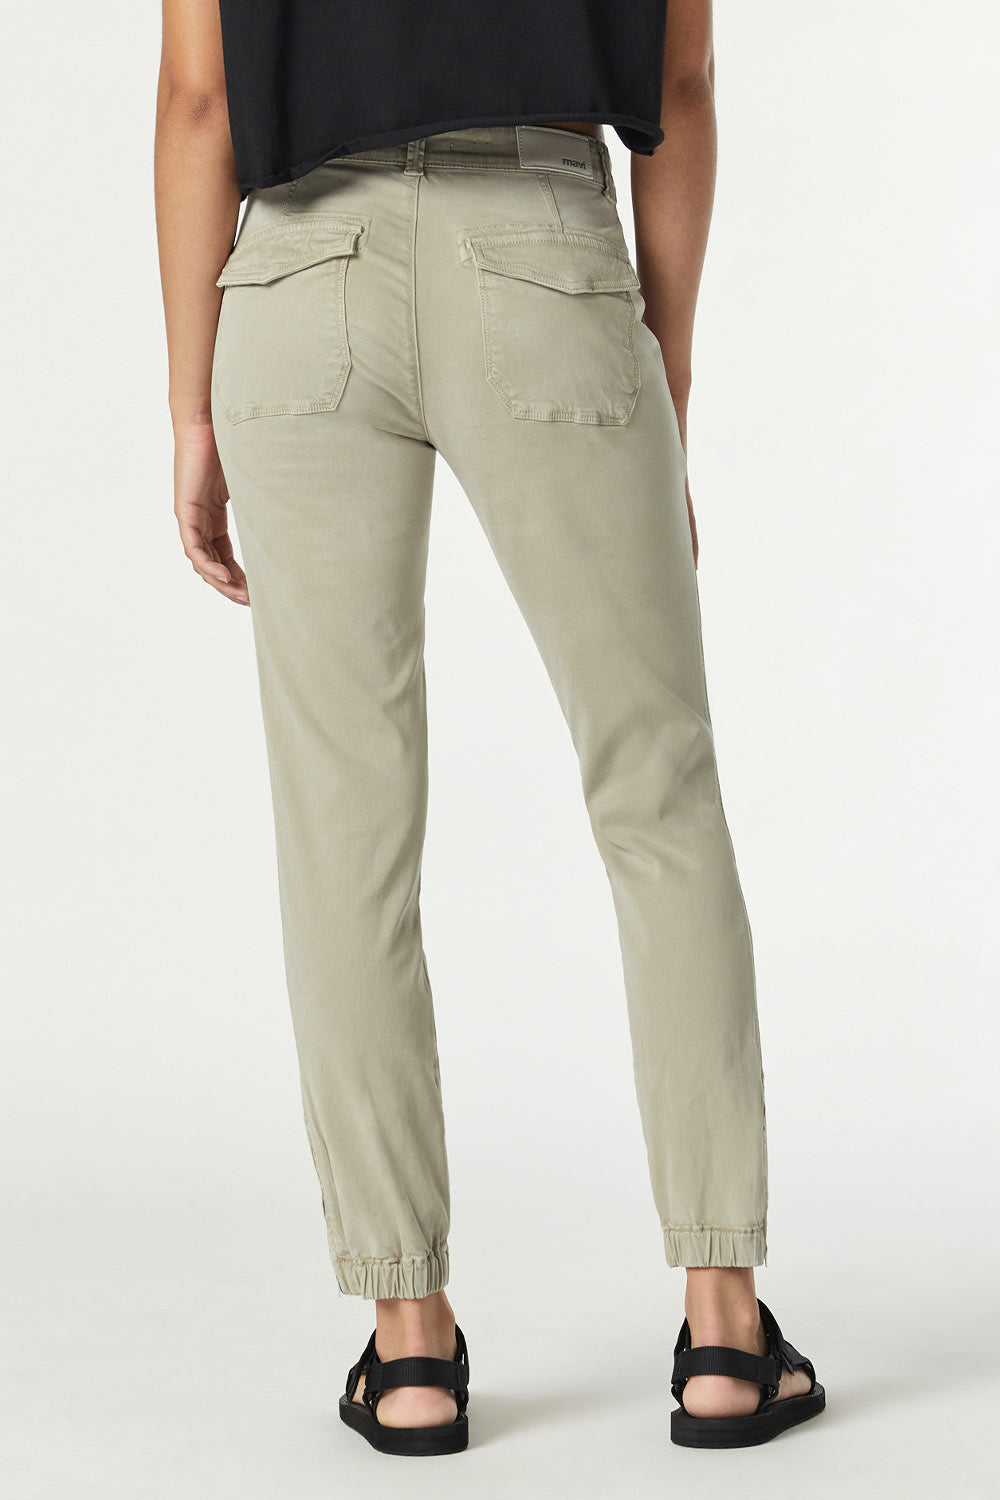 Back view of Mavi Jeans (M100774-83341) Women's Ivy Slim Cargo Pants Abbey Stone Sateen TwillIvy Slim Cargo Pants Abbey Stone Sateen Twill with Pockets